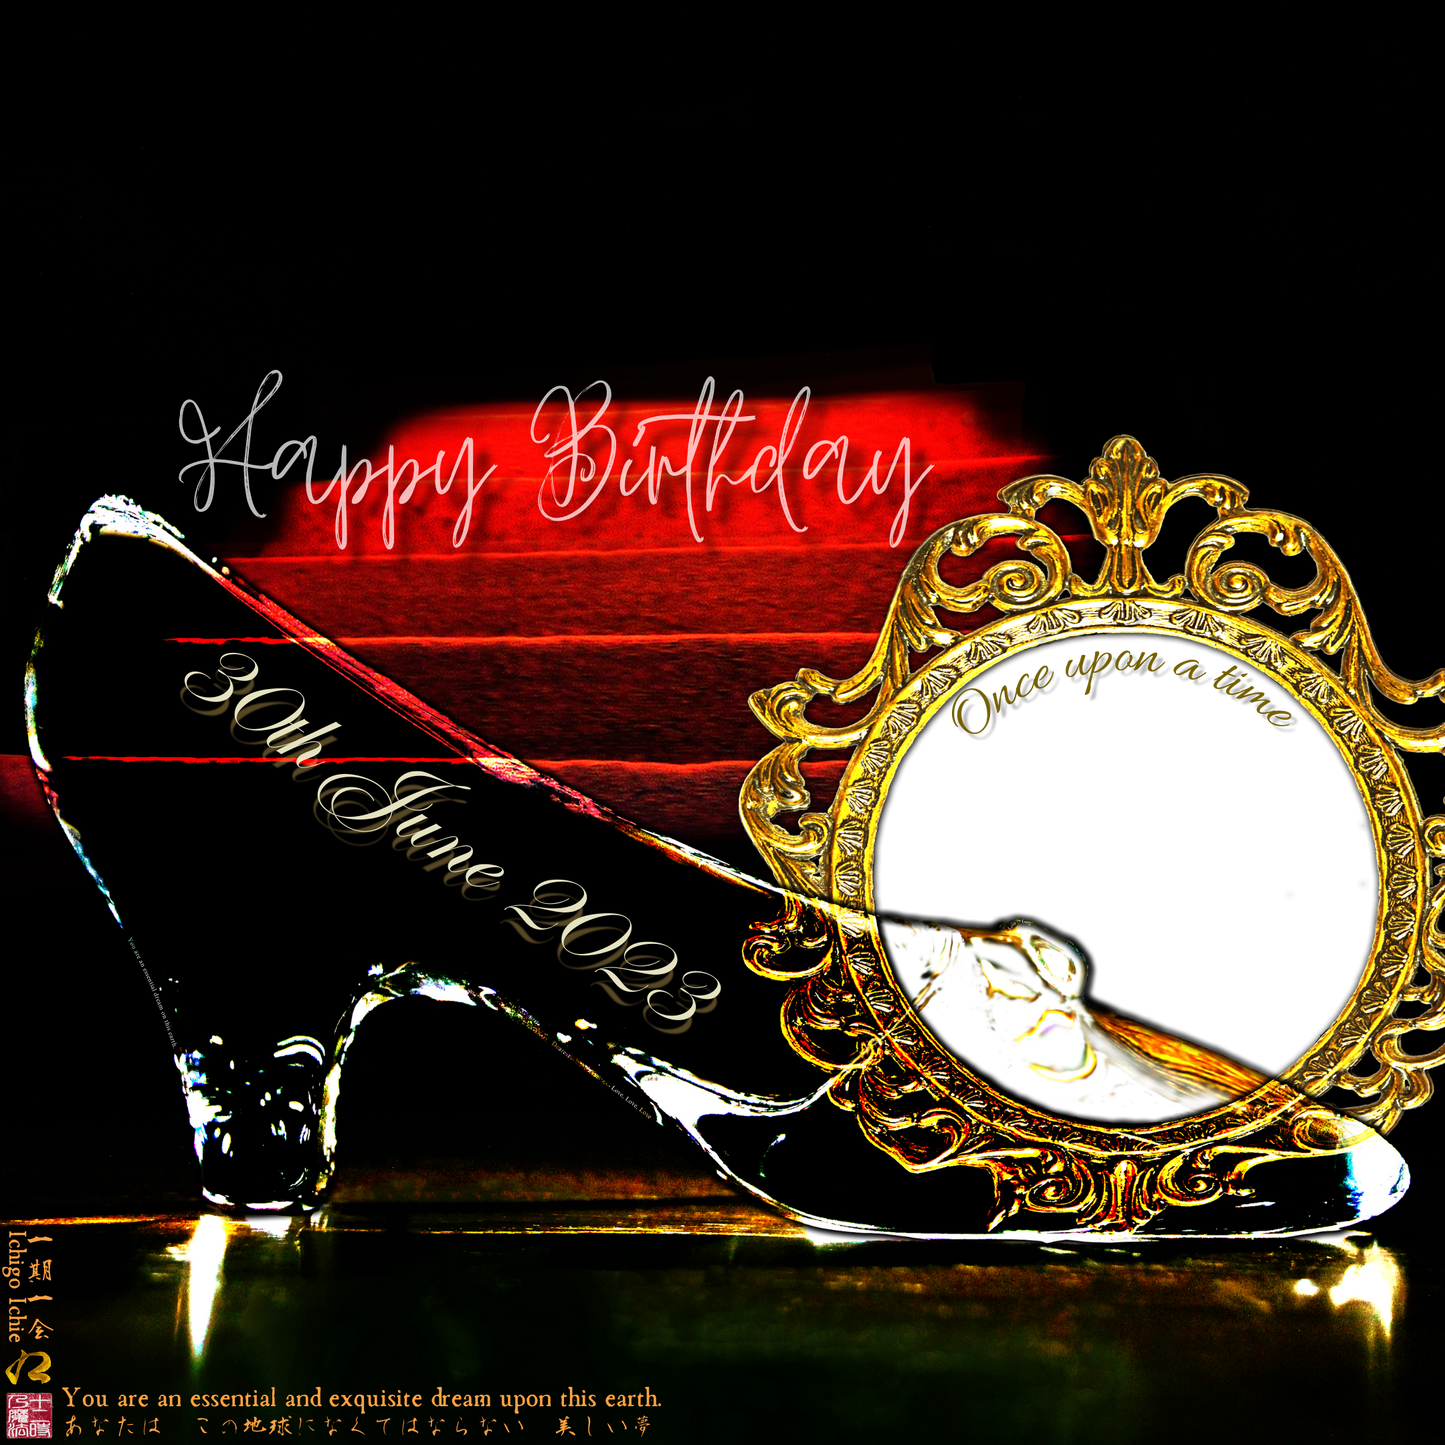 Happy Birthday Glass Slipper "Ichigo Ichie" 30th June 2023 the Right (1-of-1) NFT Art